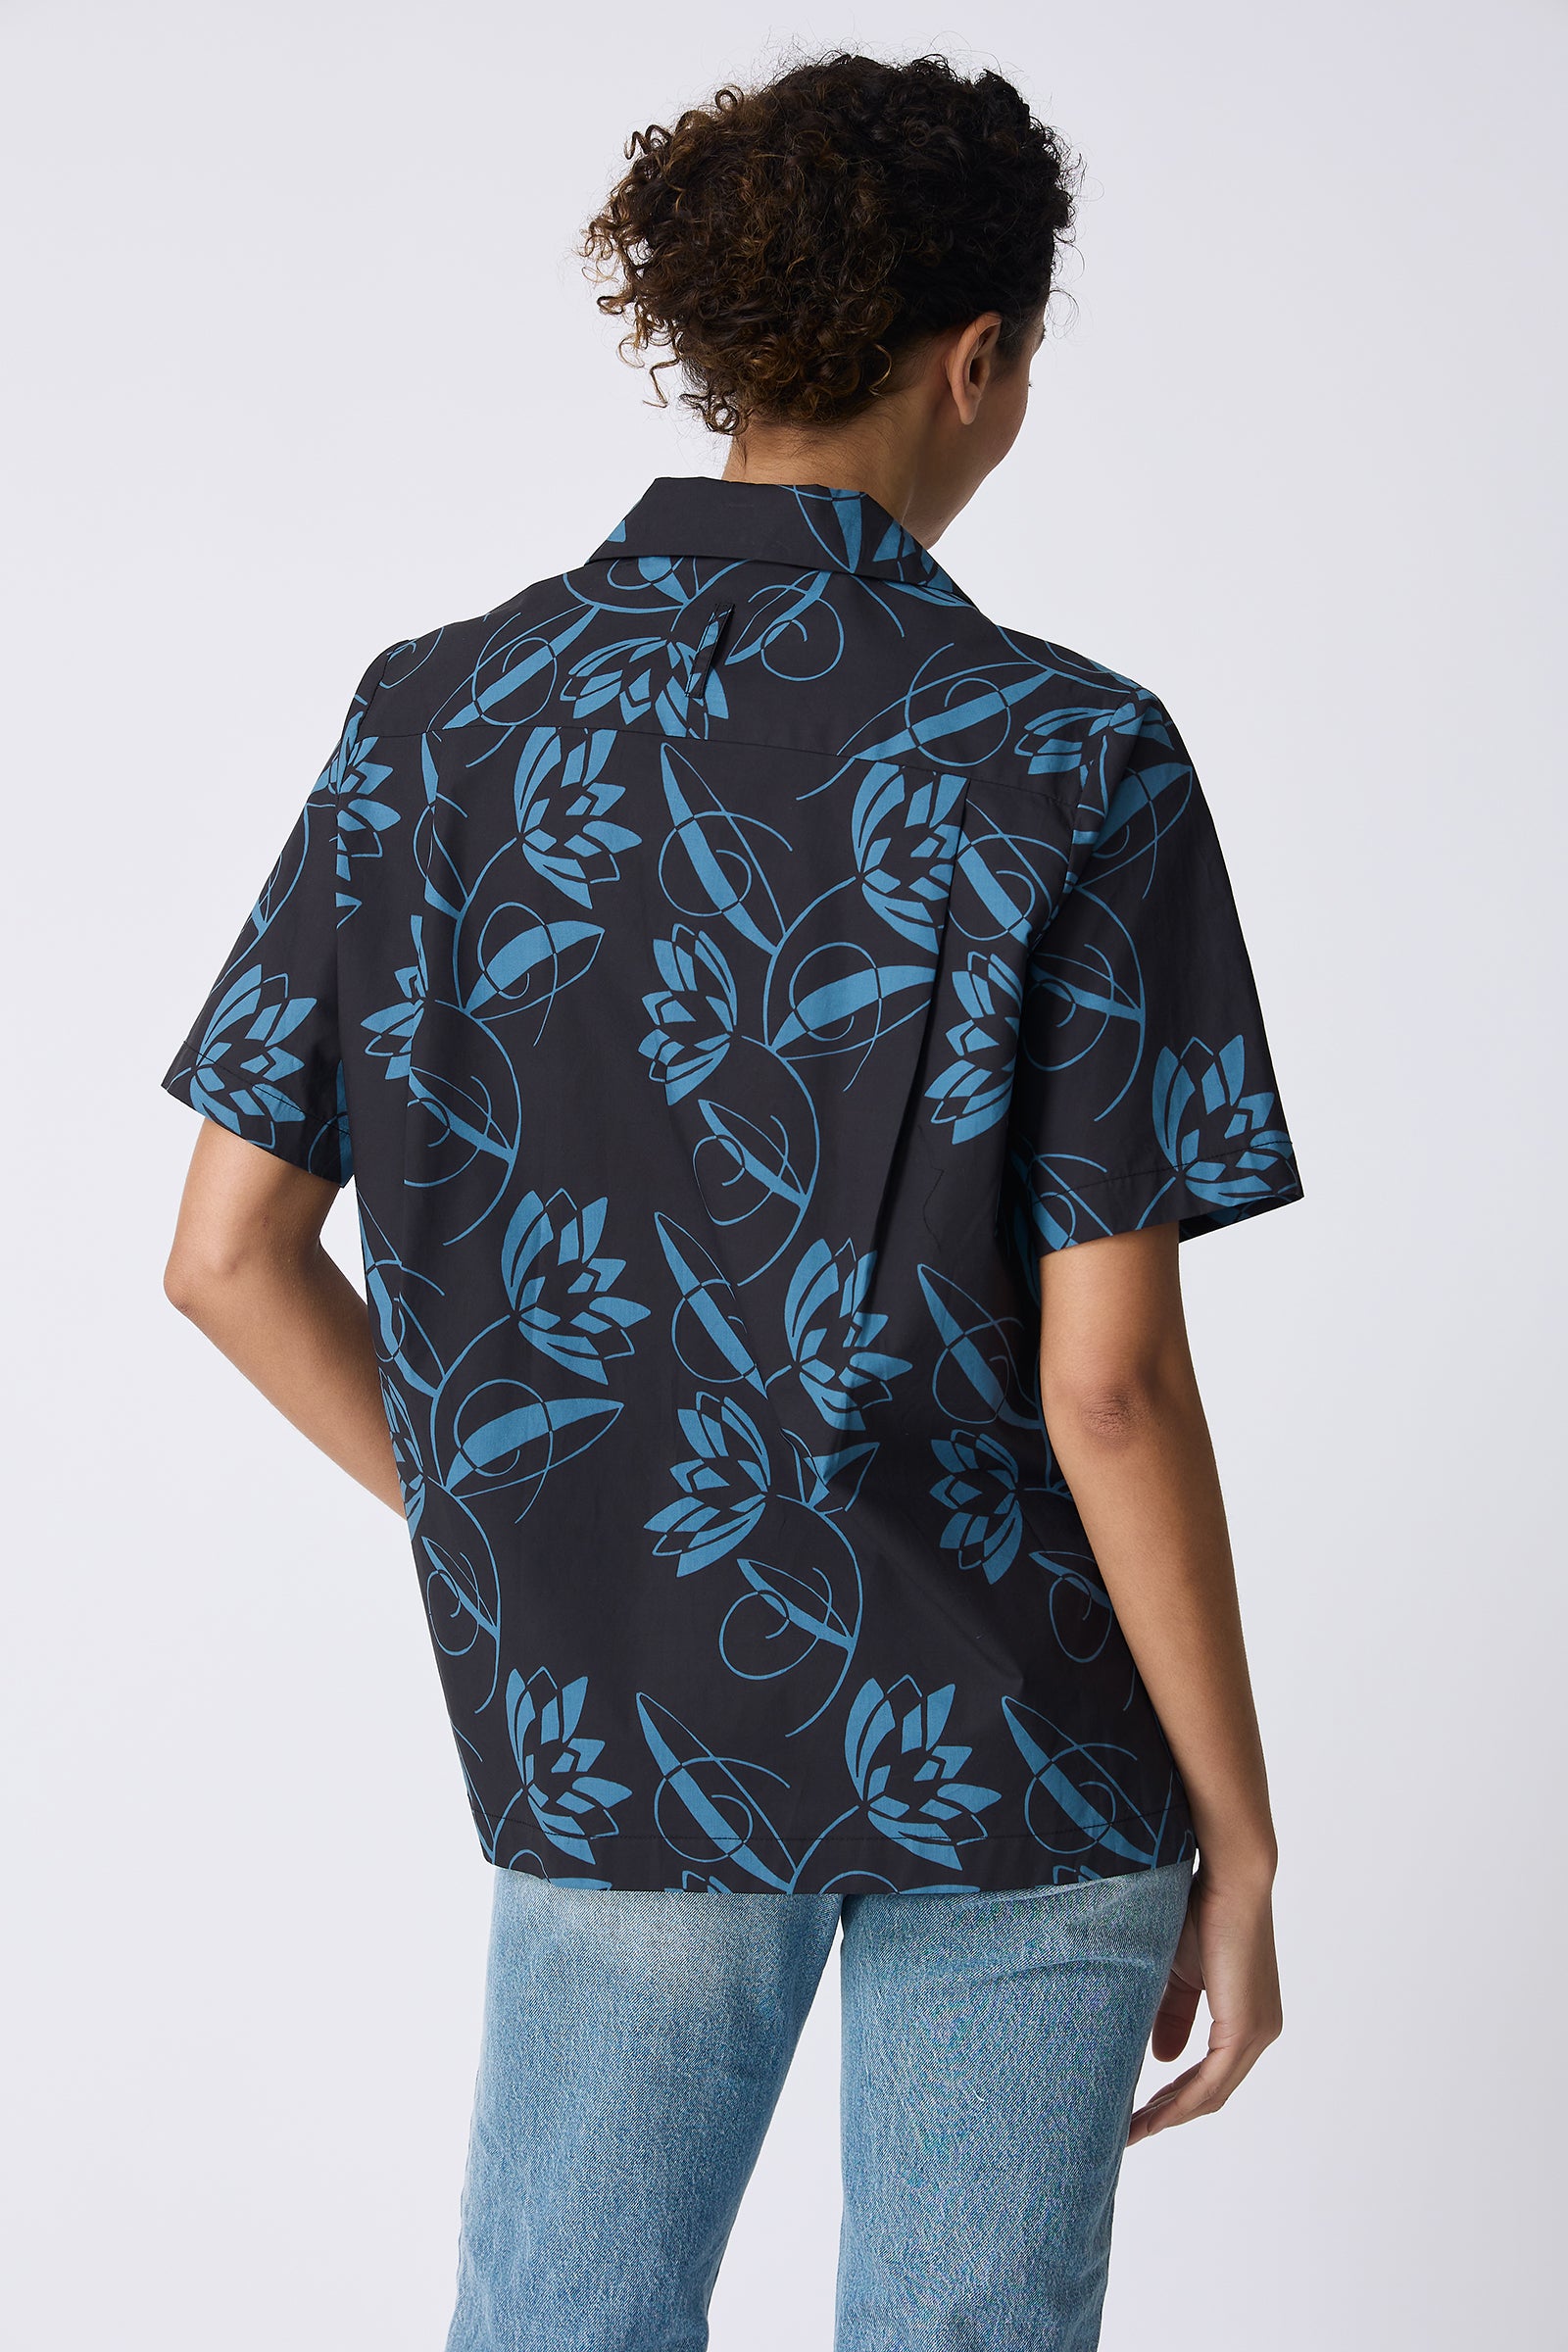 Kal Rieman Vacation Shirt in Lotus Print Blue on model back view